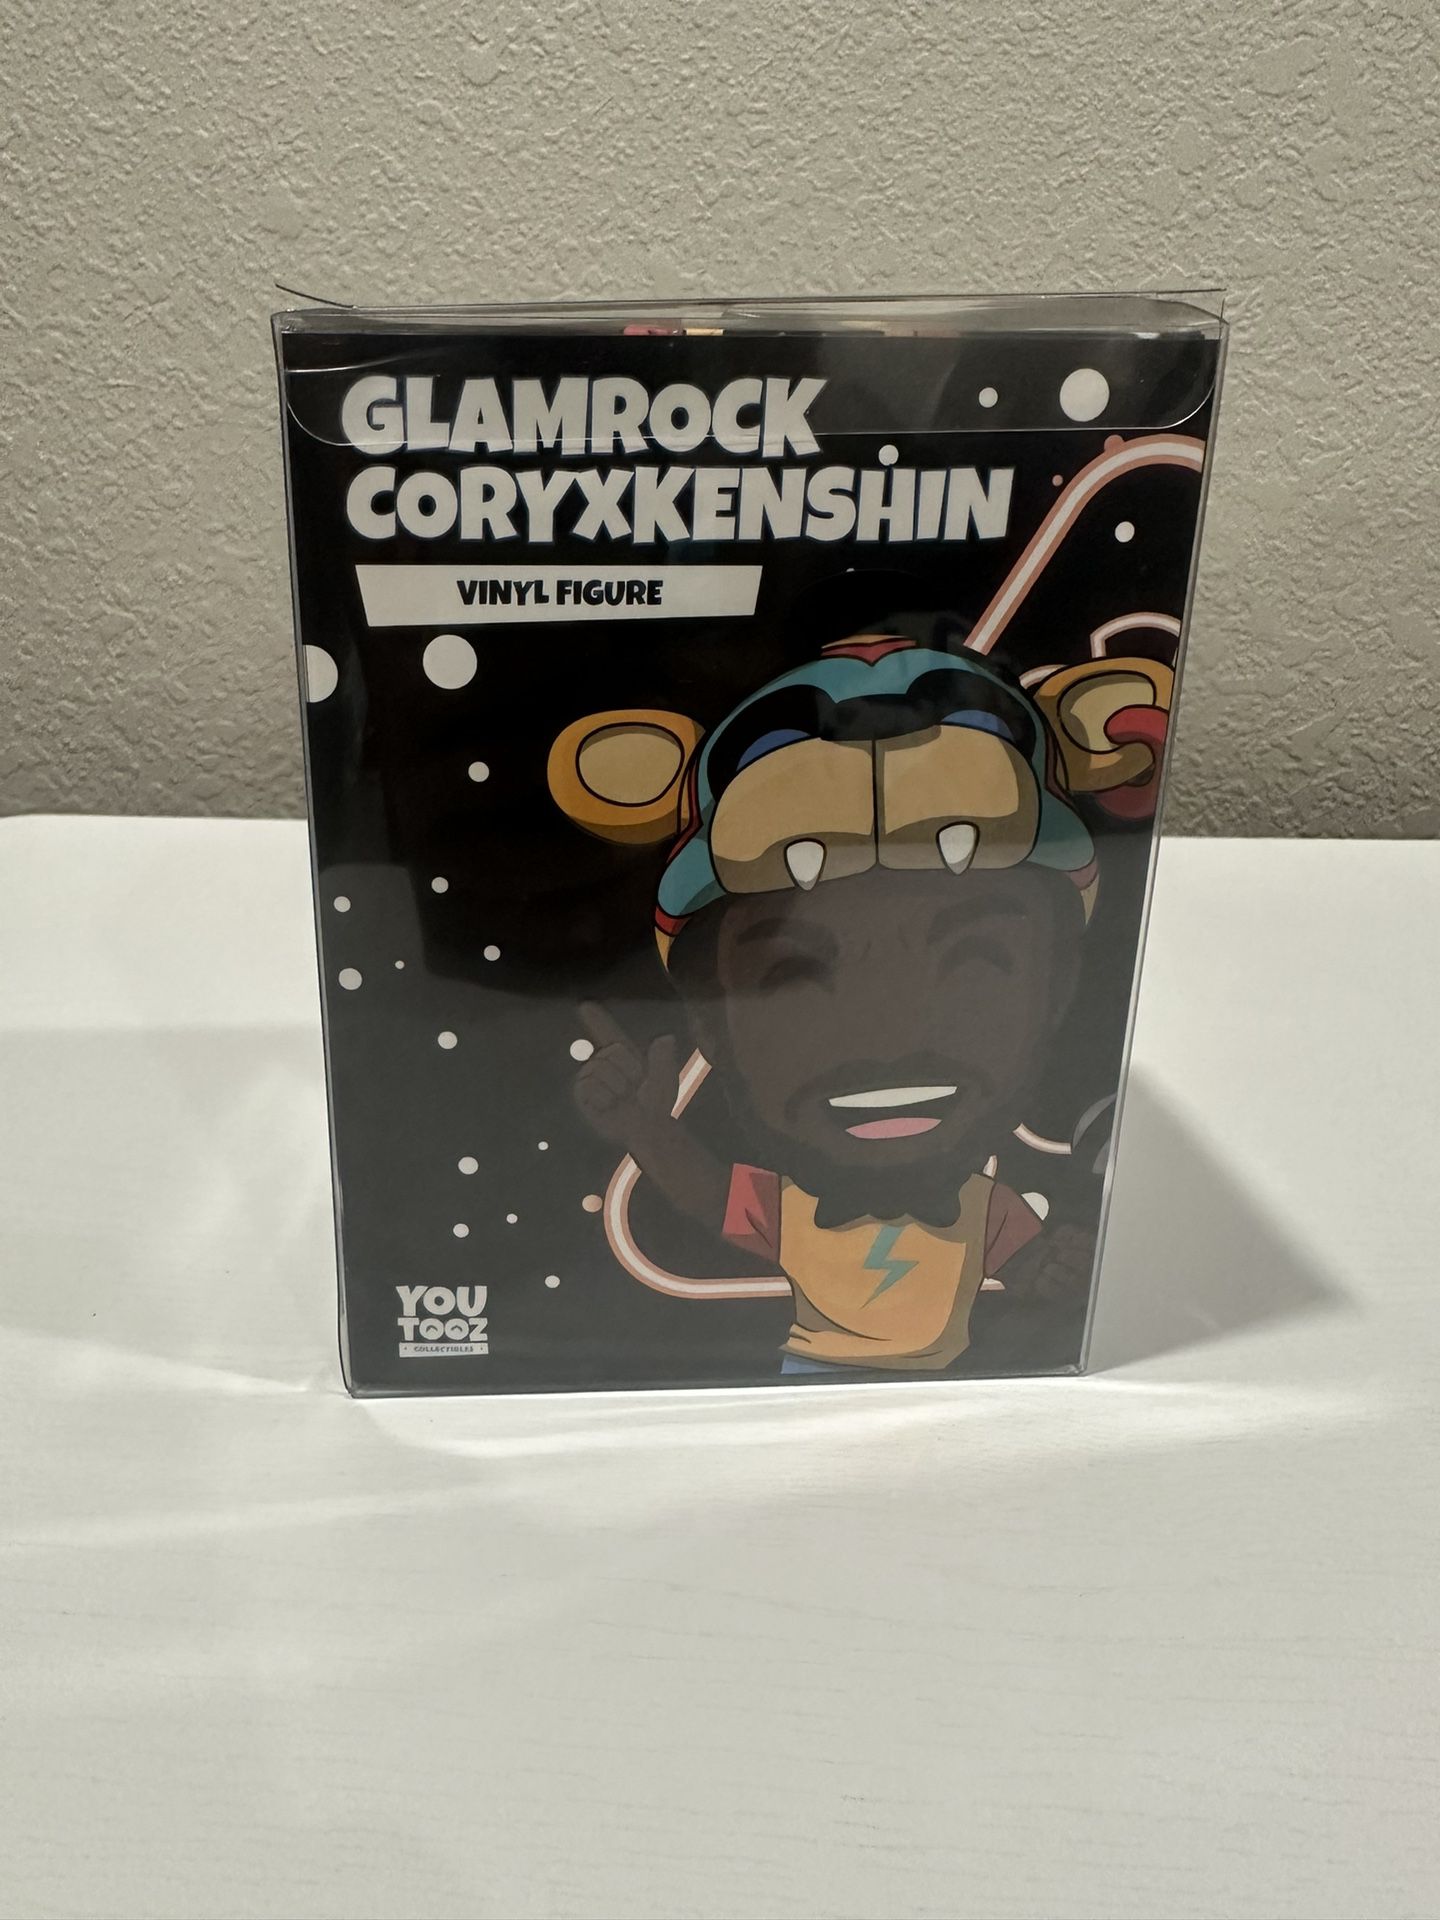 Limited Edition Glam rock Coryxkenshin Five Nights At Freddy’s Vinyl Figure (Brand New)